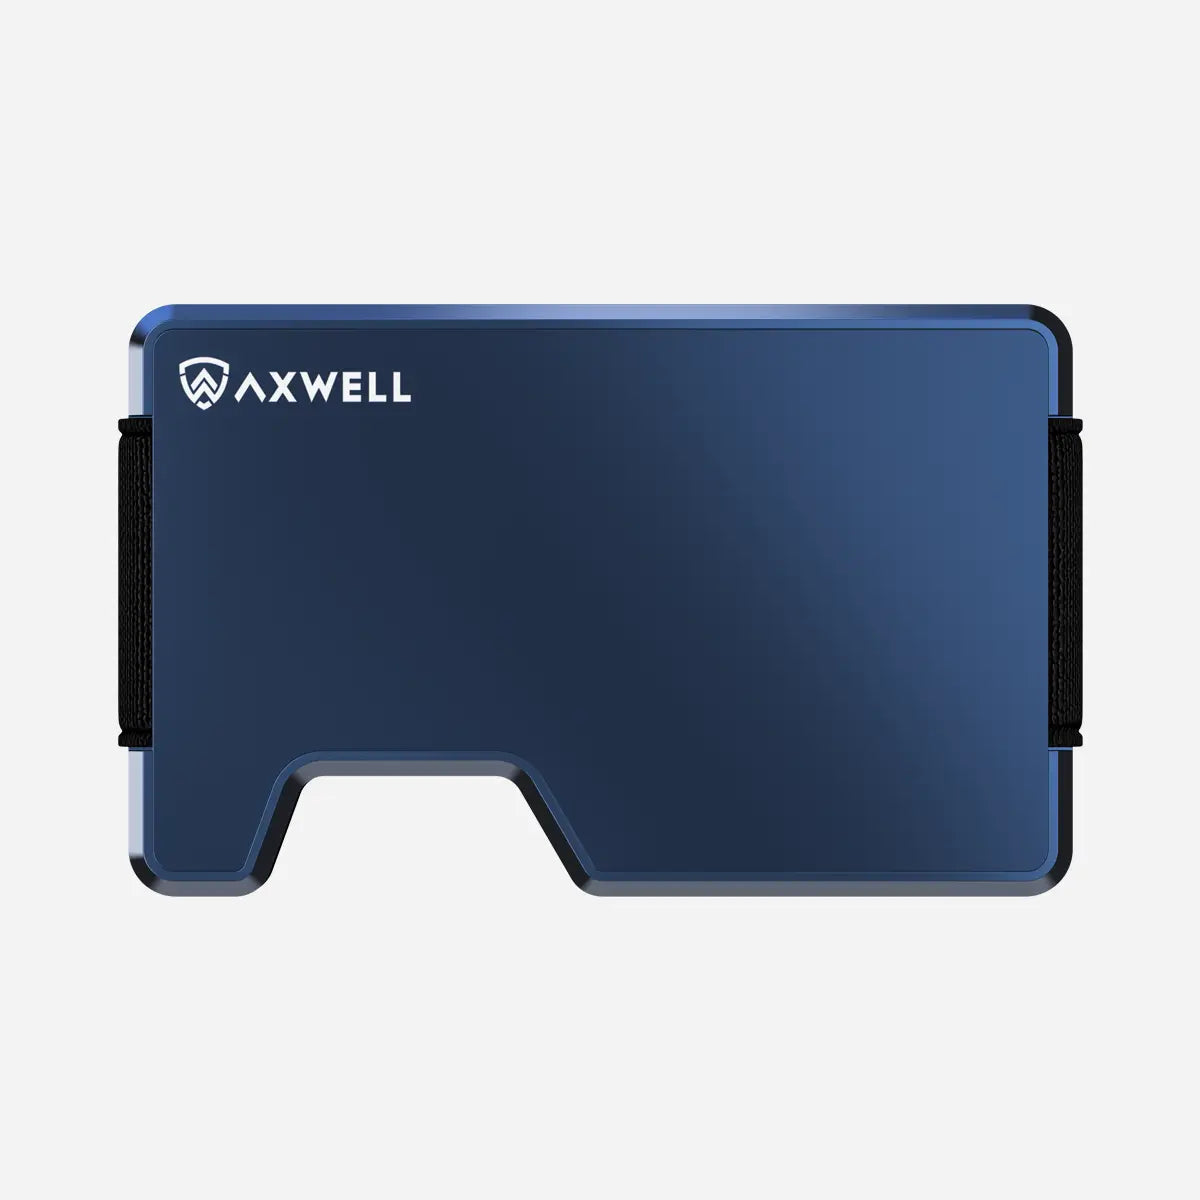 Metal Wallet - Gunmetal Gray - Aluminum - Axwell Wallet